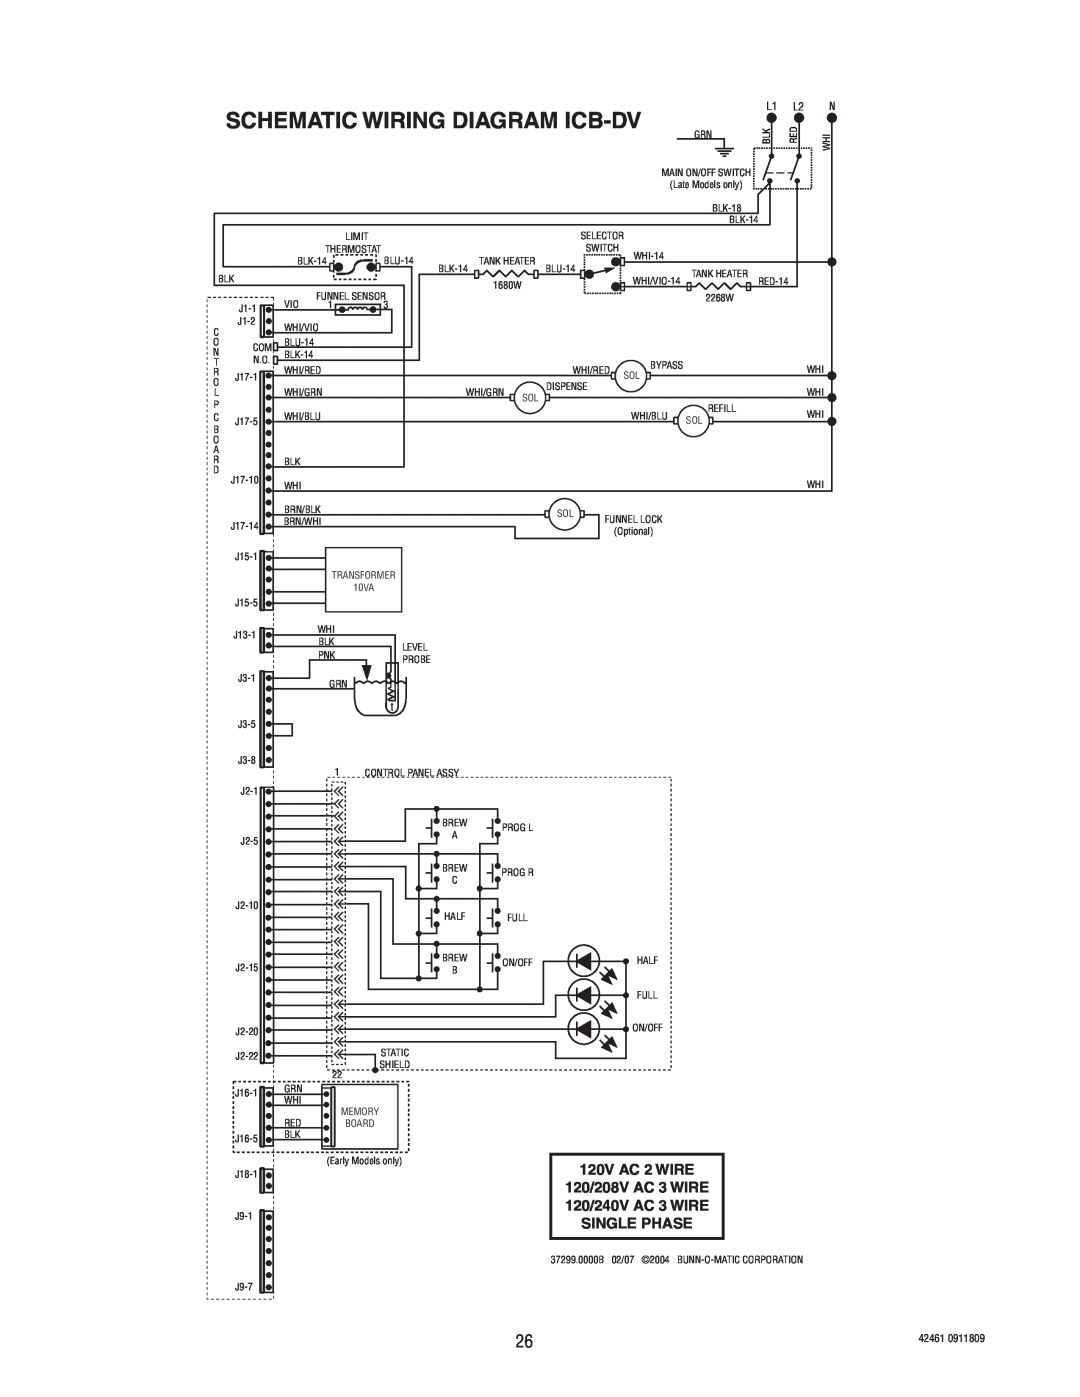 Bunn ICB/TWIN, ITB/ITCB Schematic Wiring Diagram Icb-Dv, 120V AC 2 WIRE 120/208V AC 3 WIRE 120/240V AC 3 WIRE SINGLE PHASE 